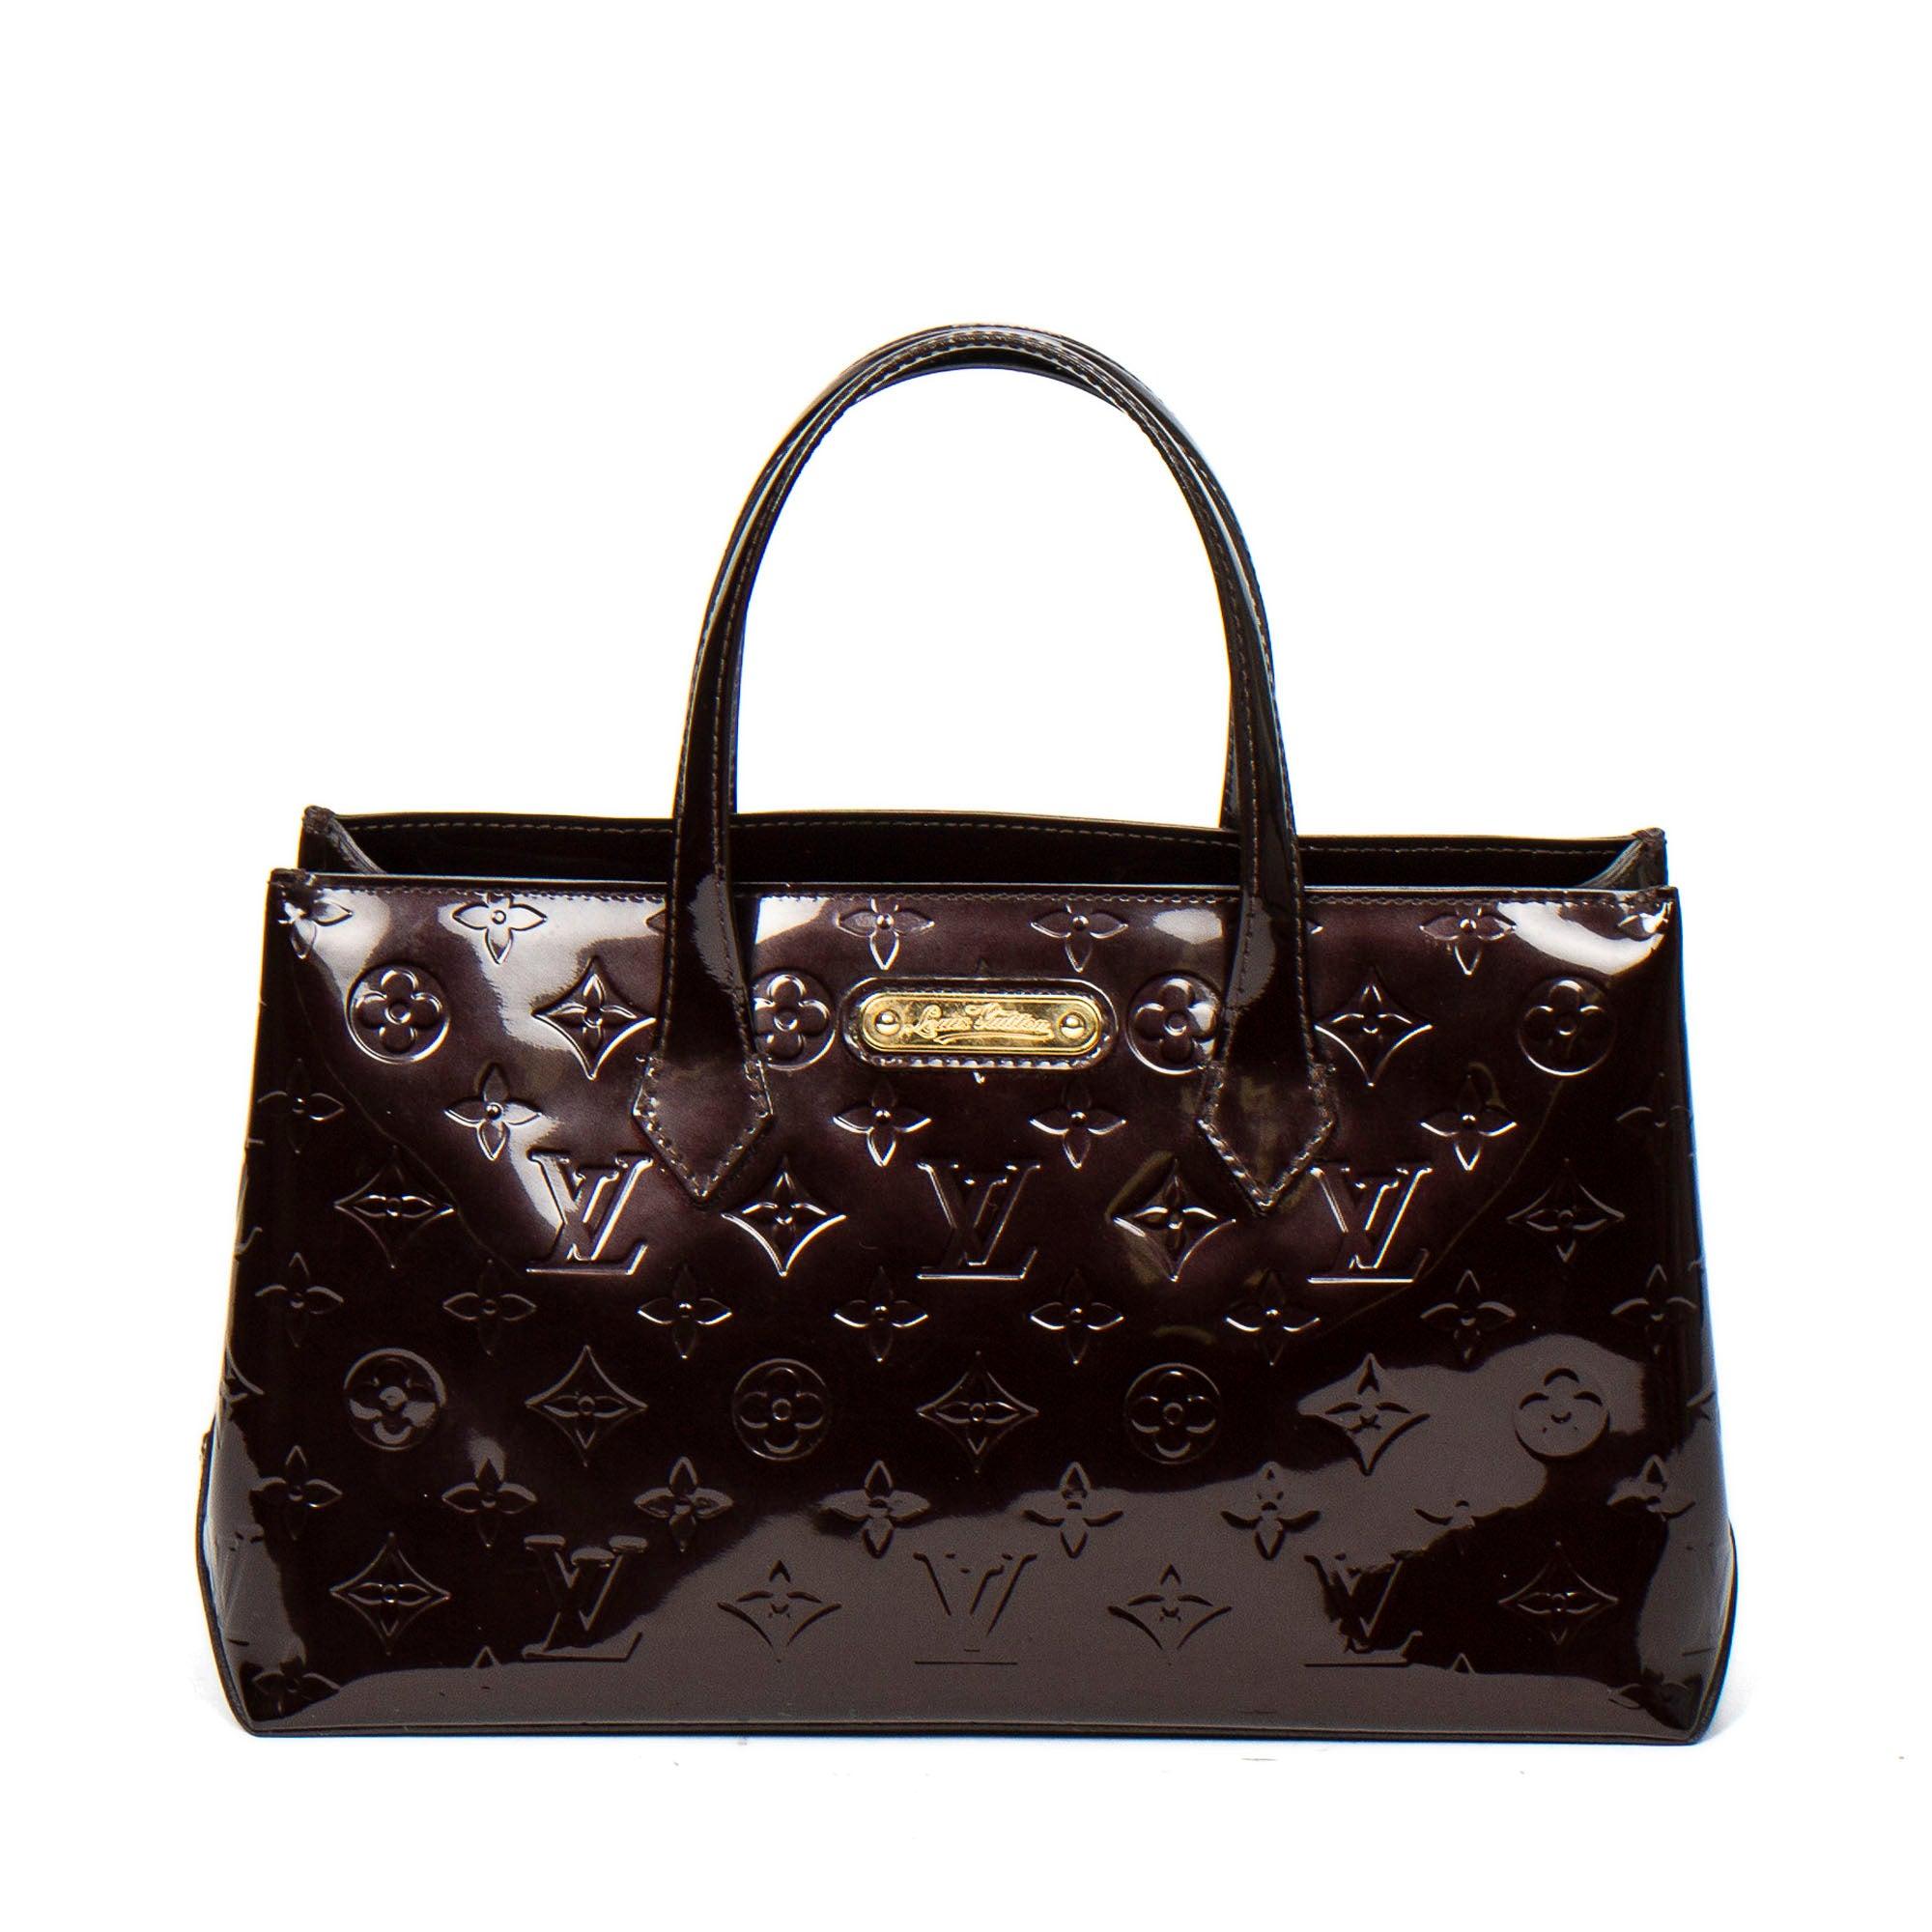 Louis Vuitton Wilshire PM Monogram, Handbag, Purse